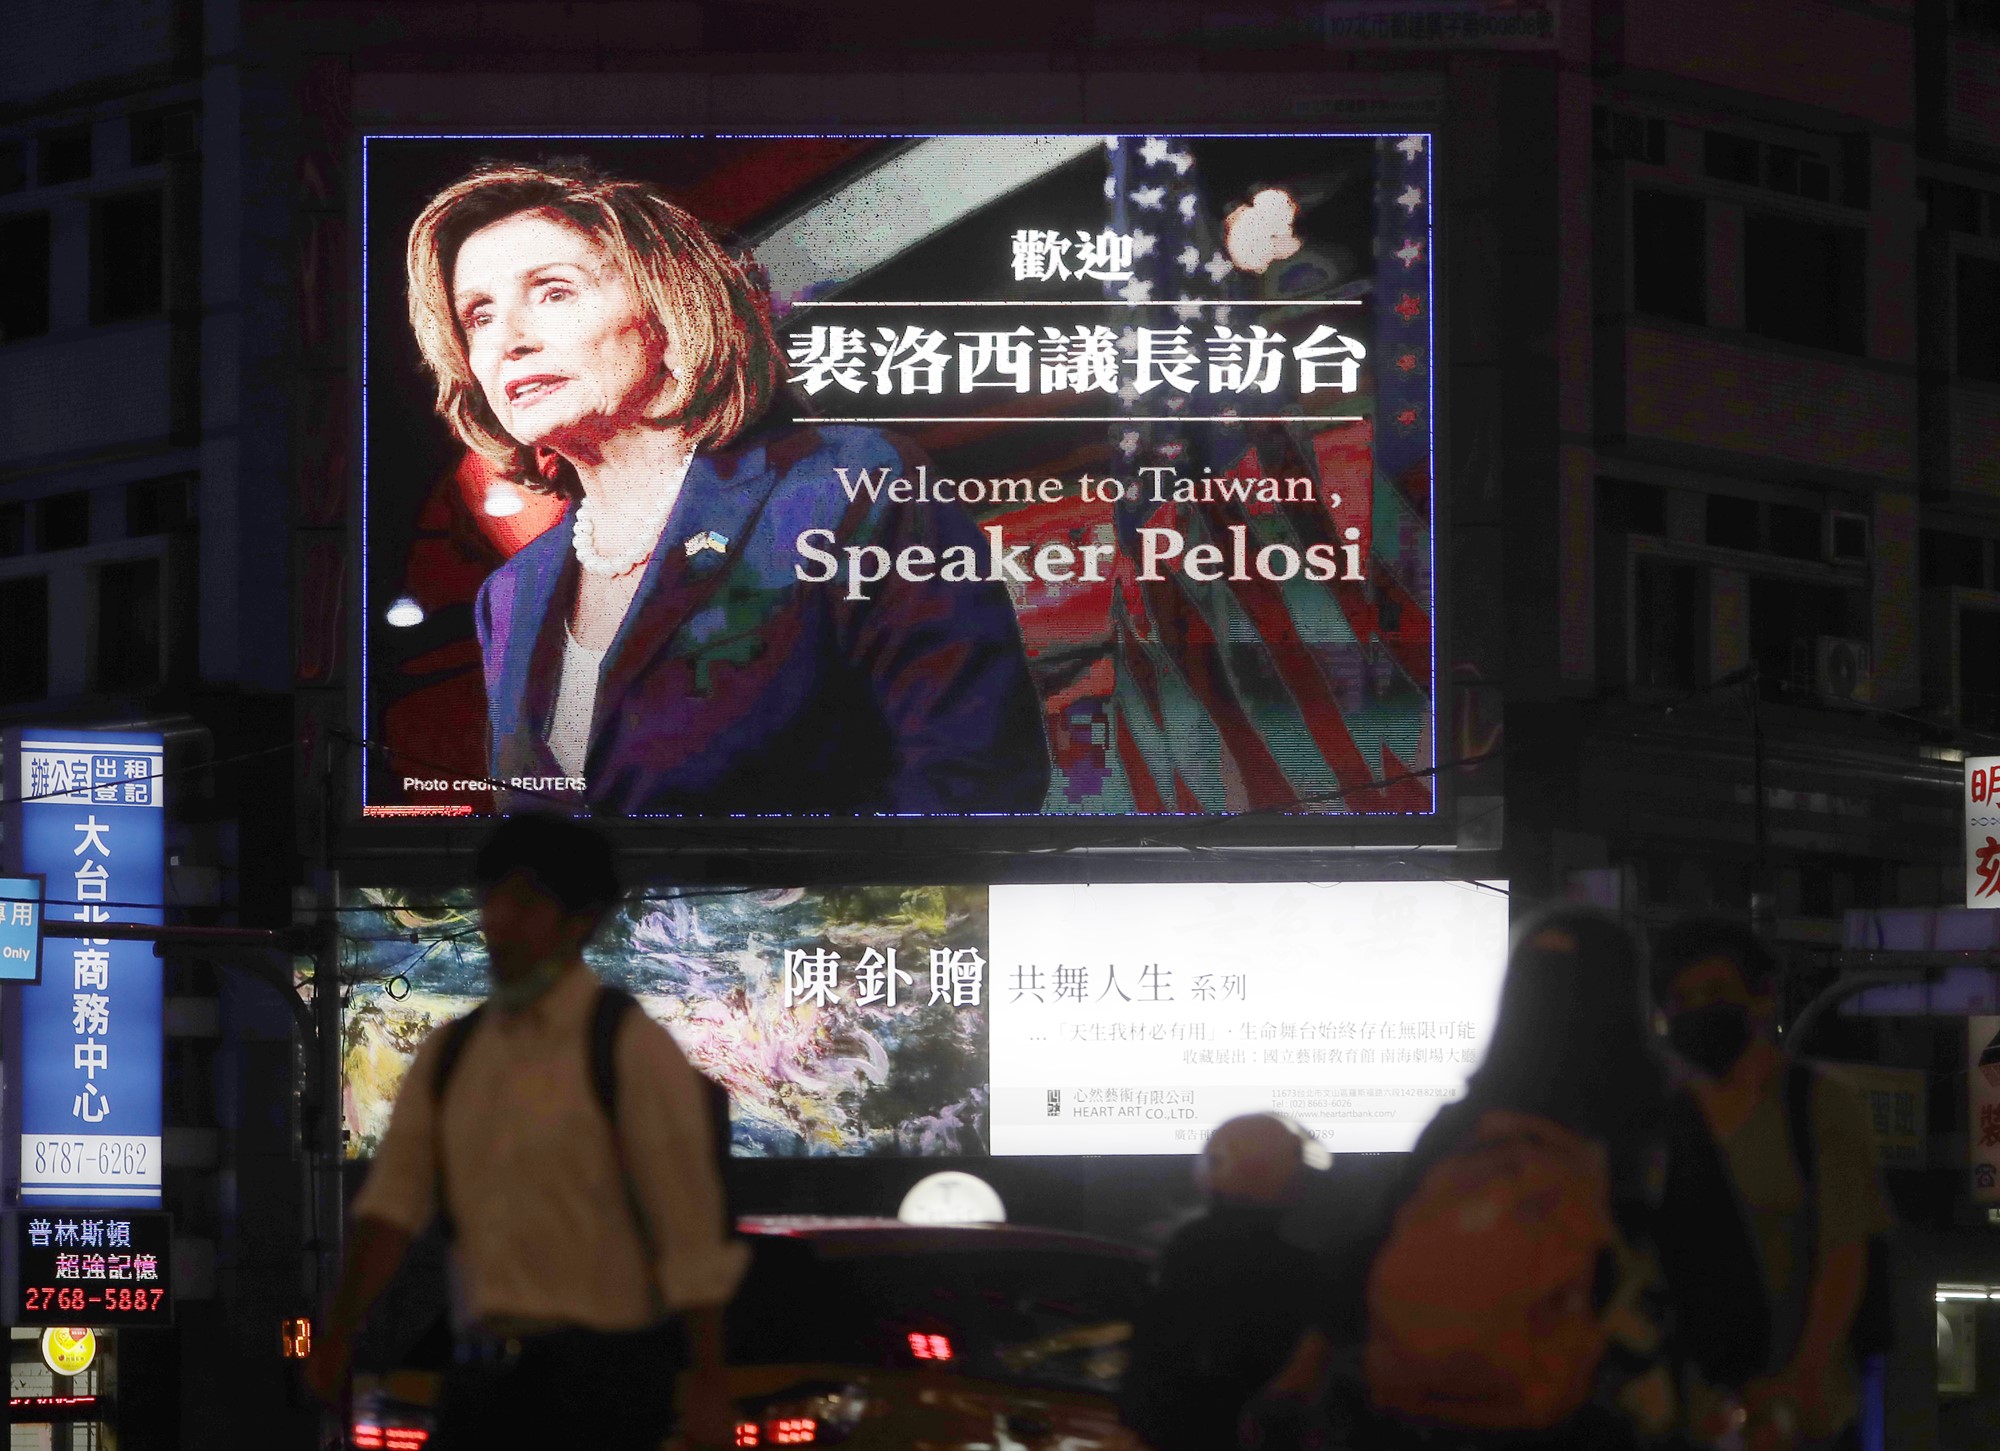 A billboard reads "welcome to Taiwan Speaker Pelosi"